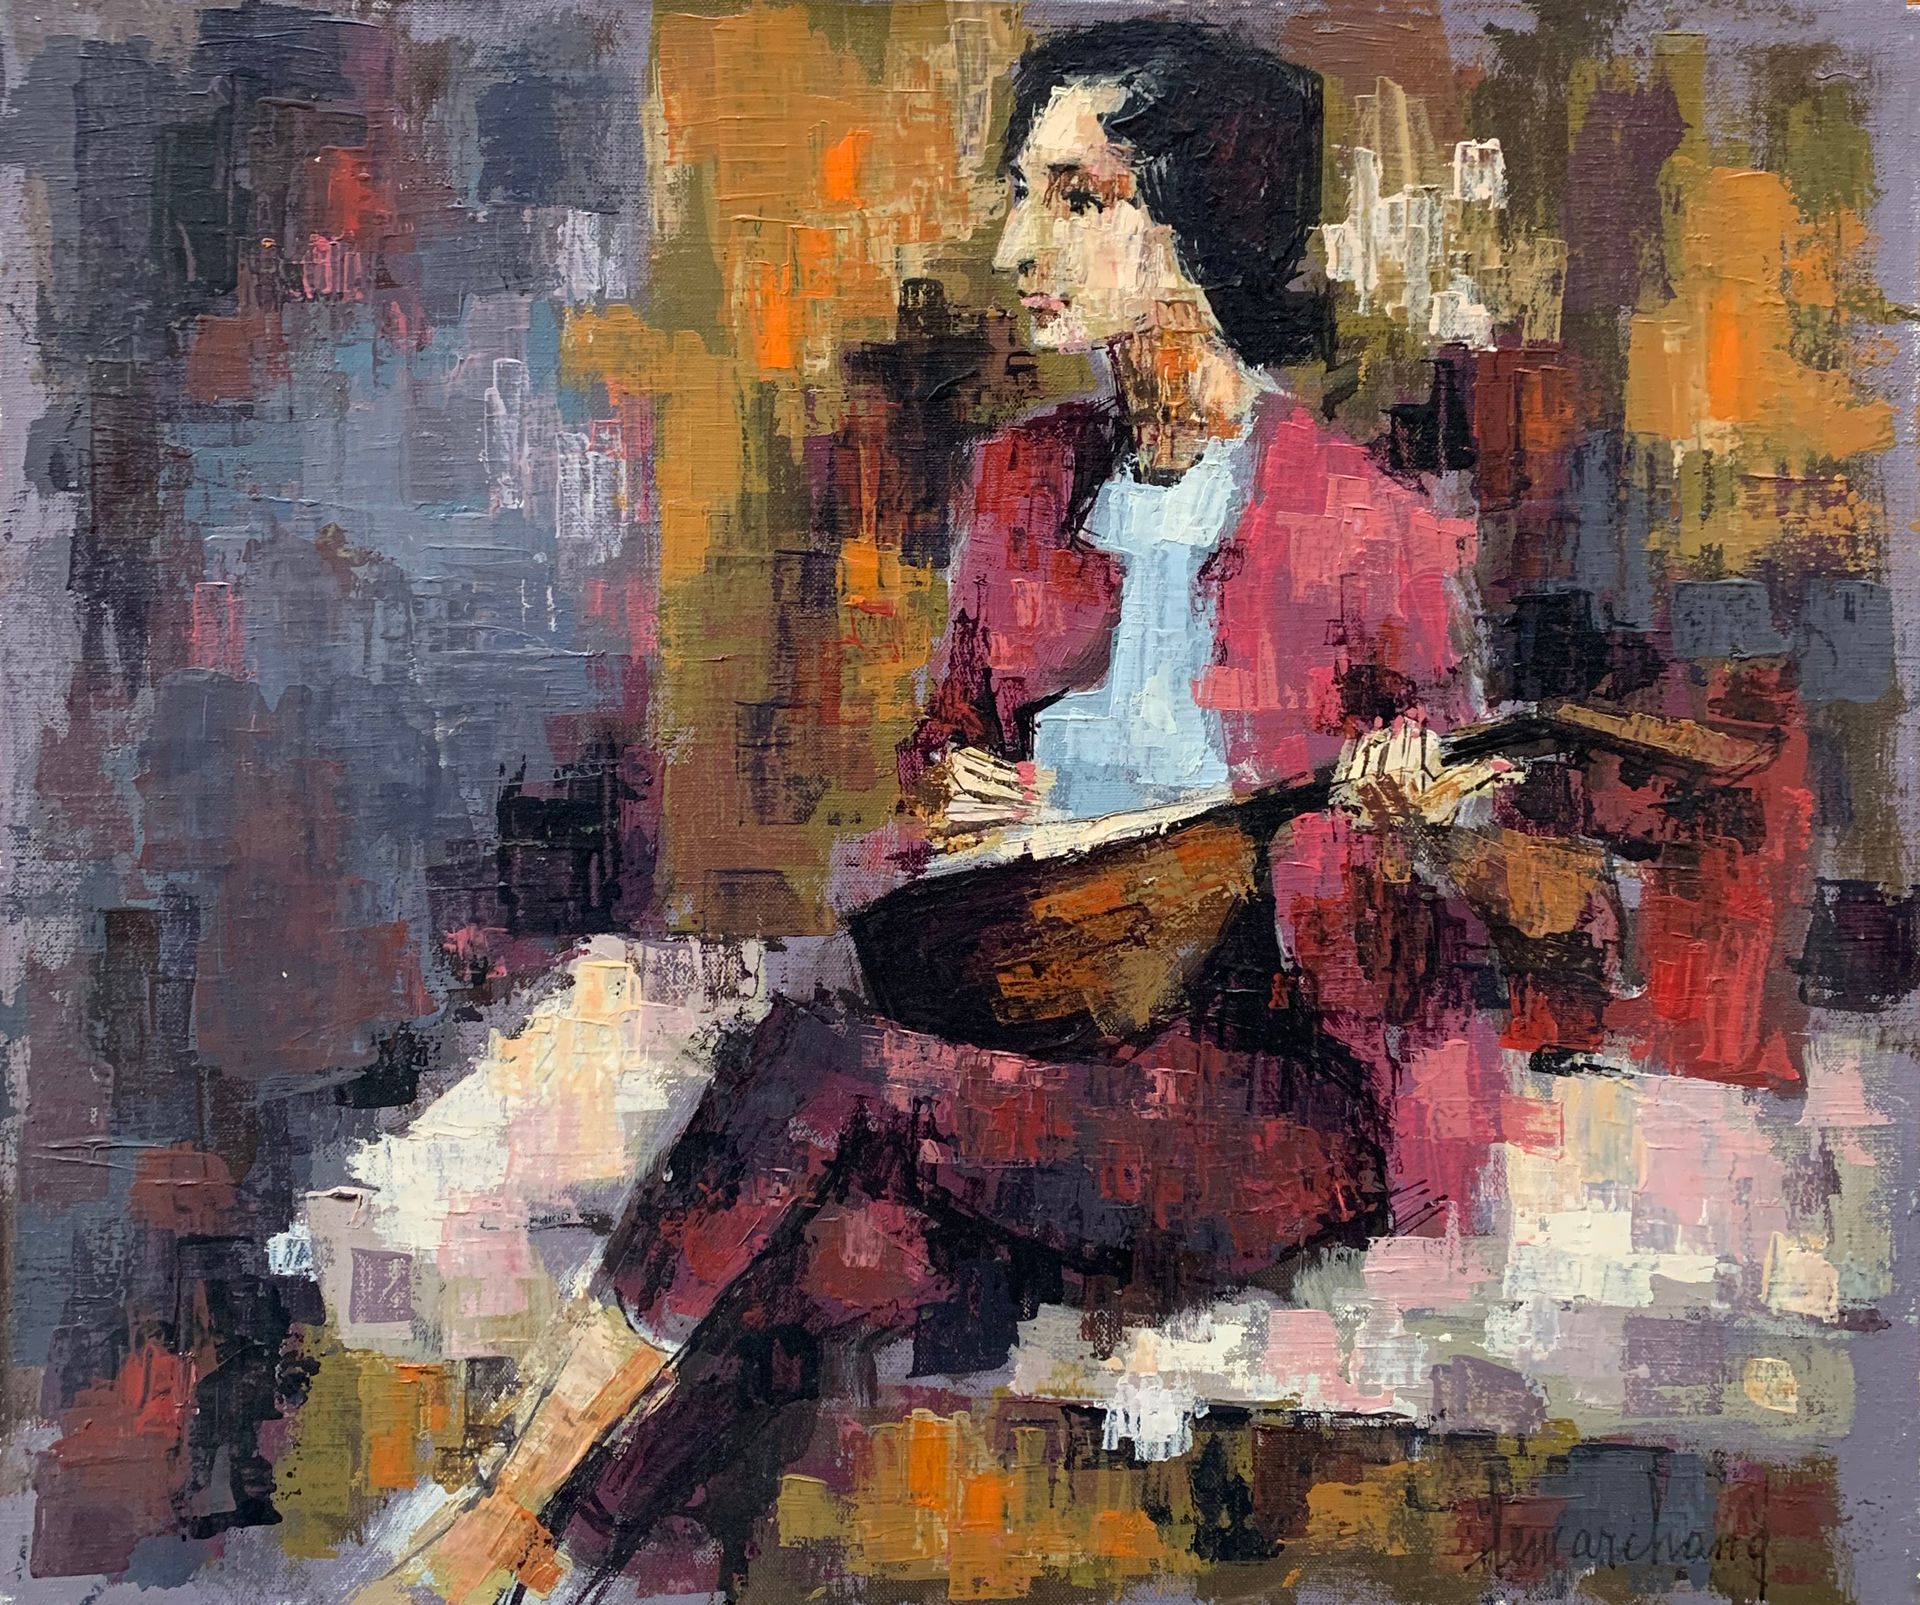 Null 皮埃尔-莱马赫德 (1906-1970)

拿着曼陀林的女人

布面油画，右下角有签名

46 x 55厘米。